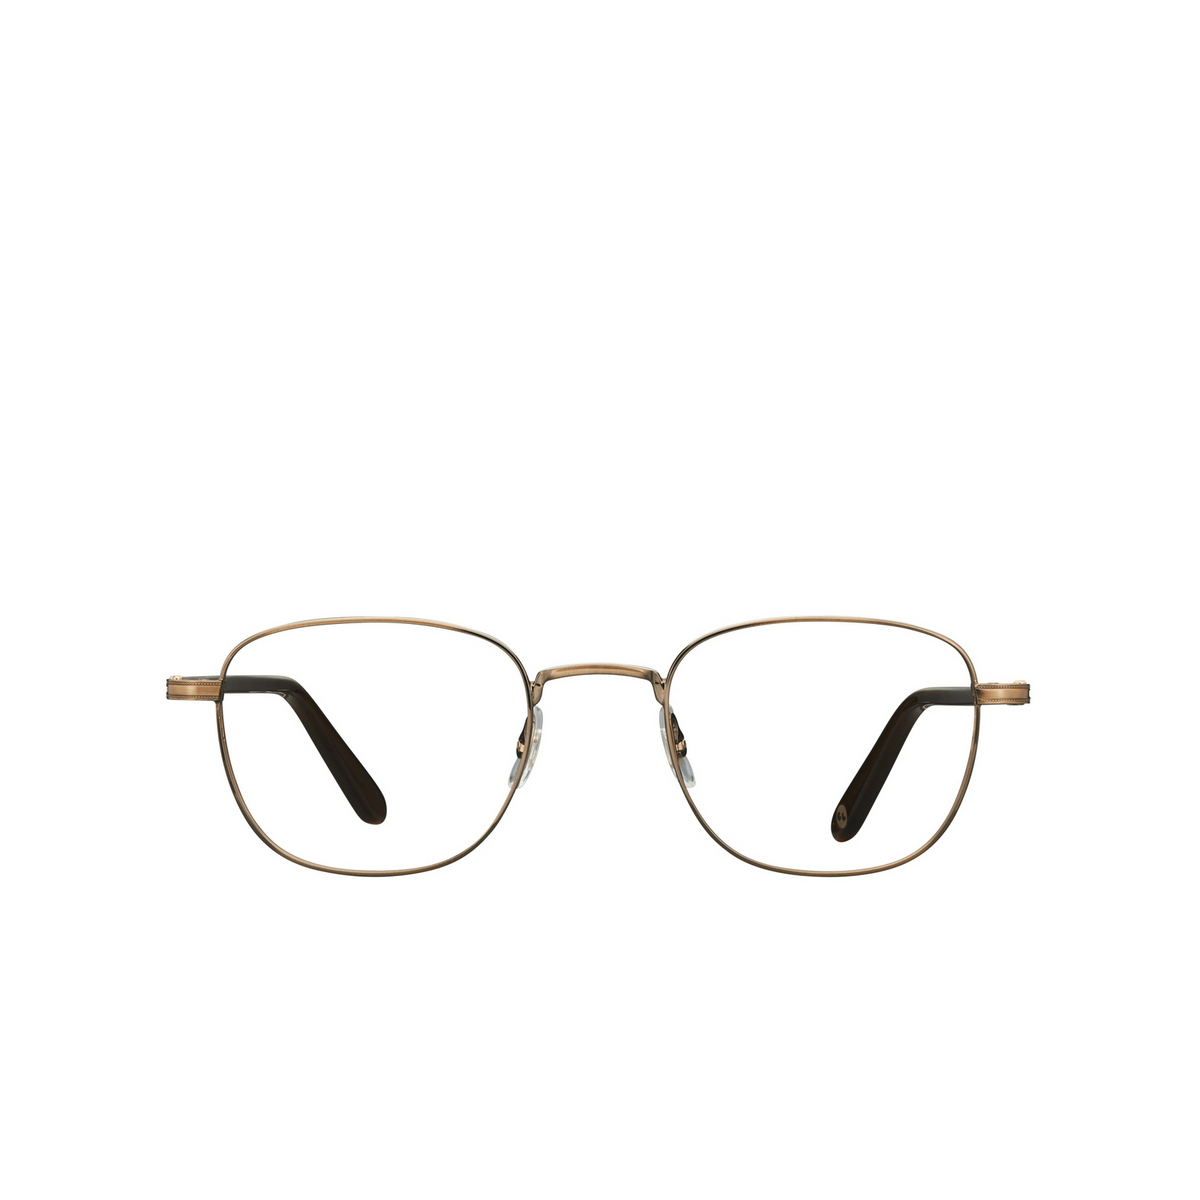 Garrett Leight GARFIELD Eyeglasses ATG-HZL Antique Gold-Hazel - front view